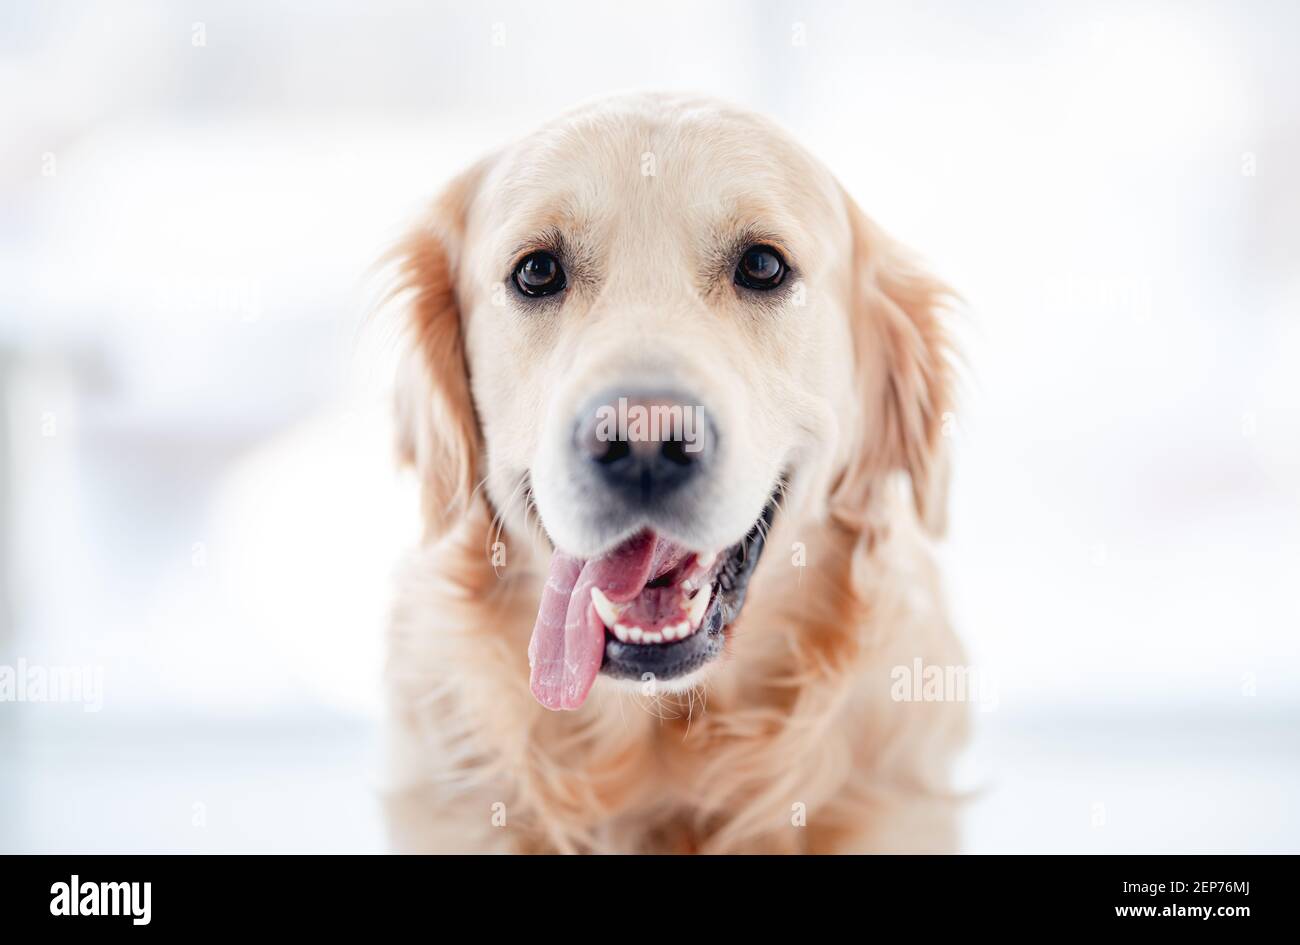 Golden retriever dog isolated on white background Stock Photo